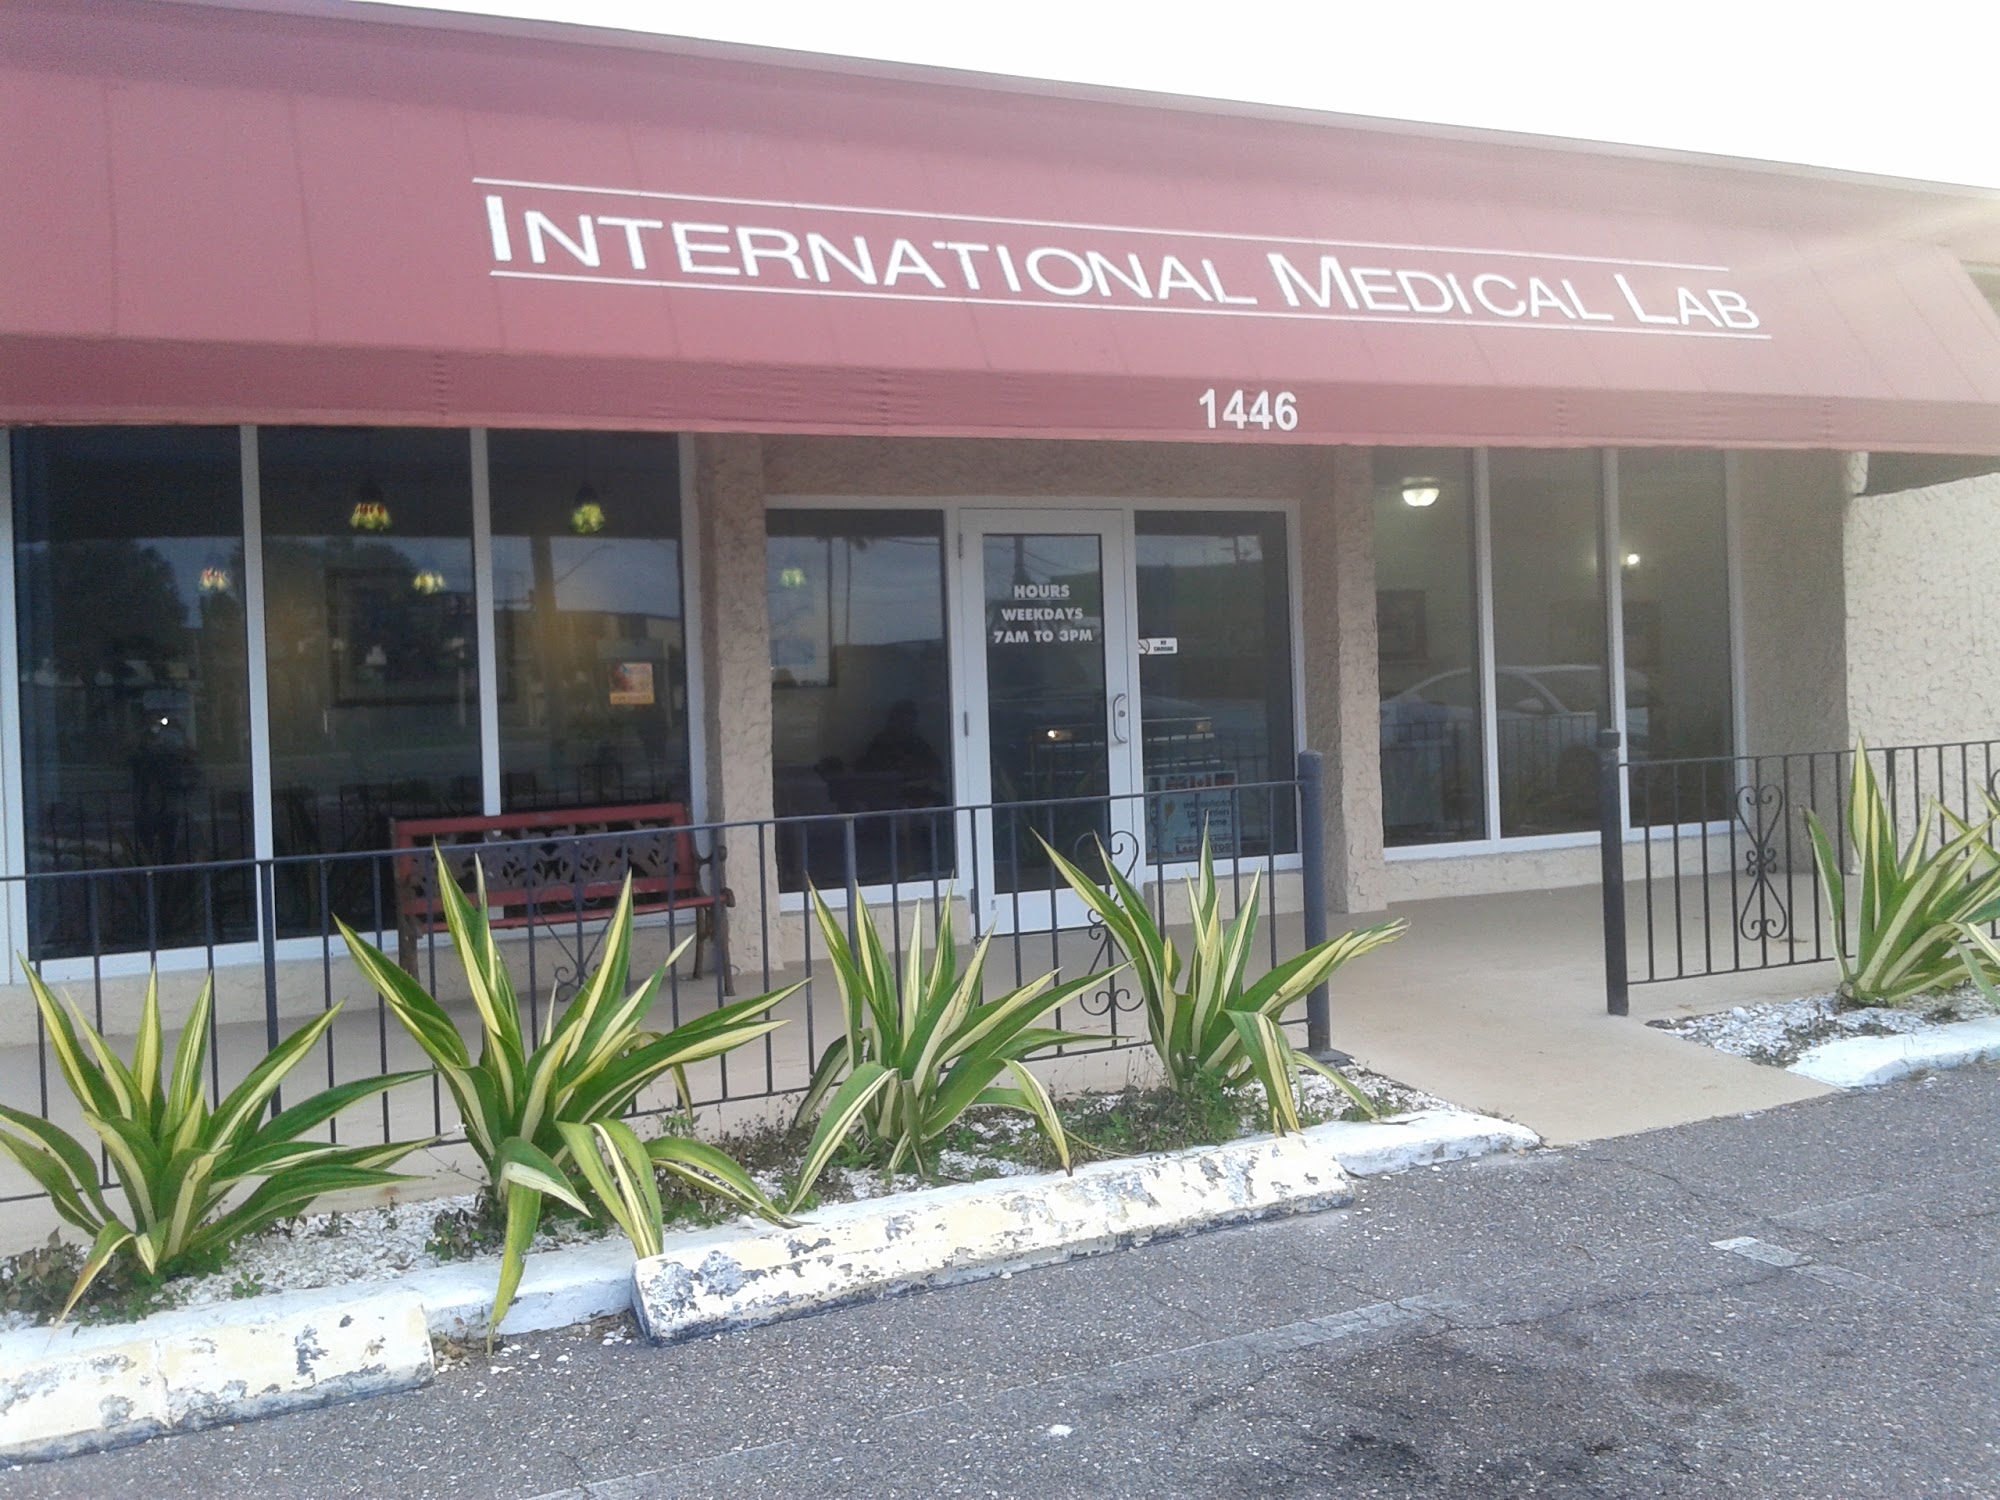 International Medical Lab